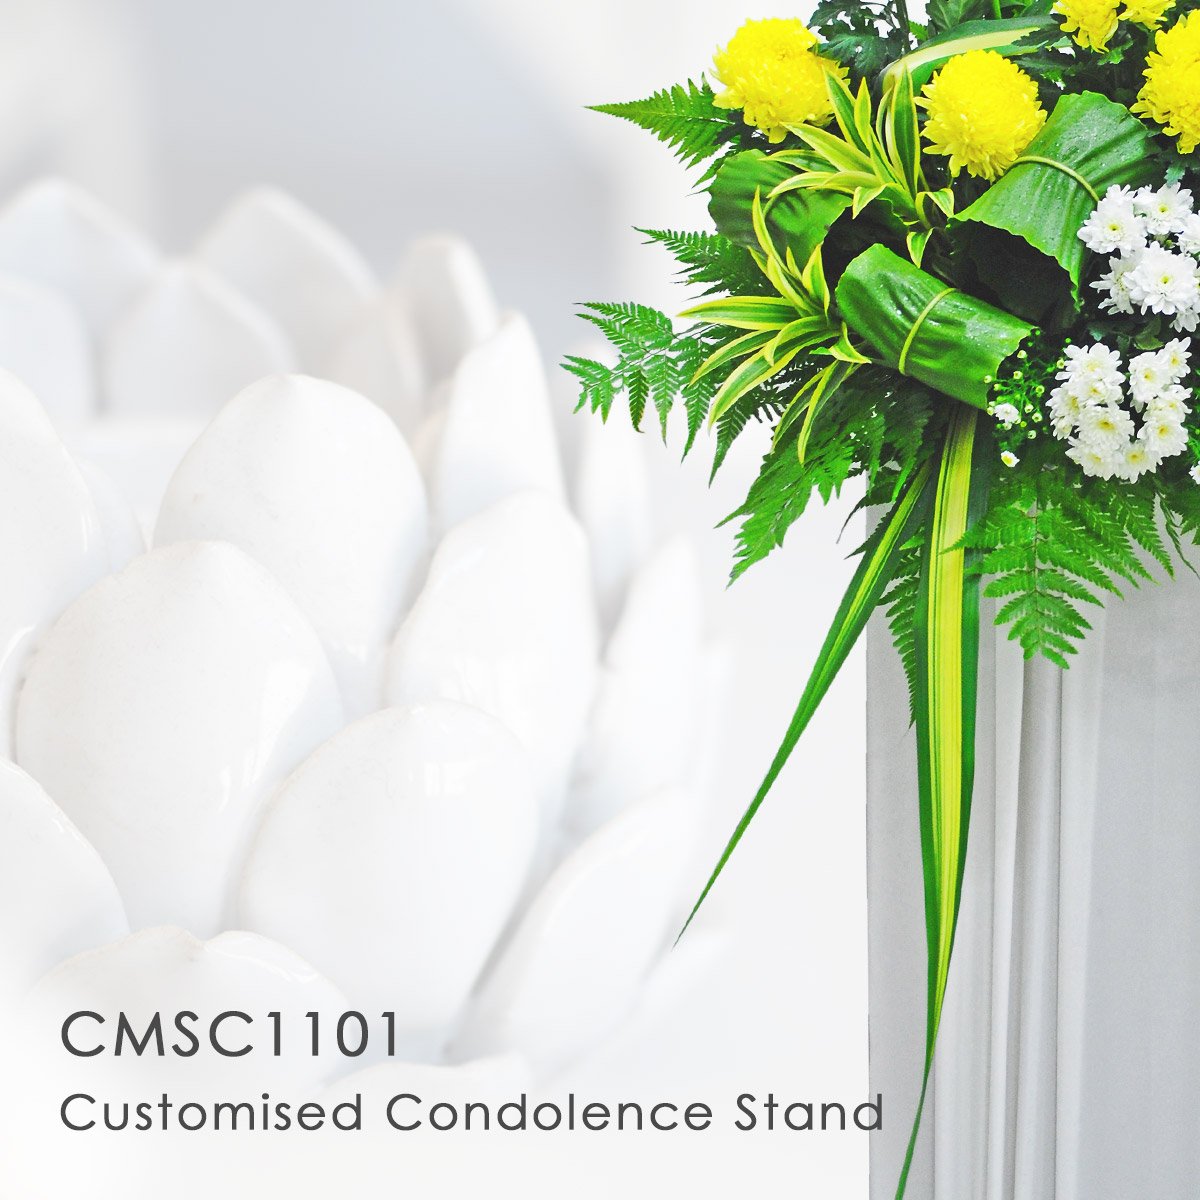 Customised Condolence Stand